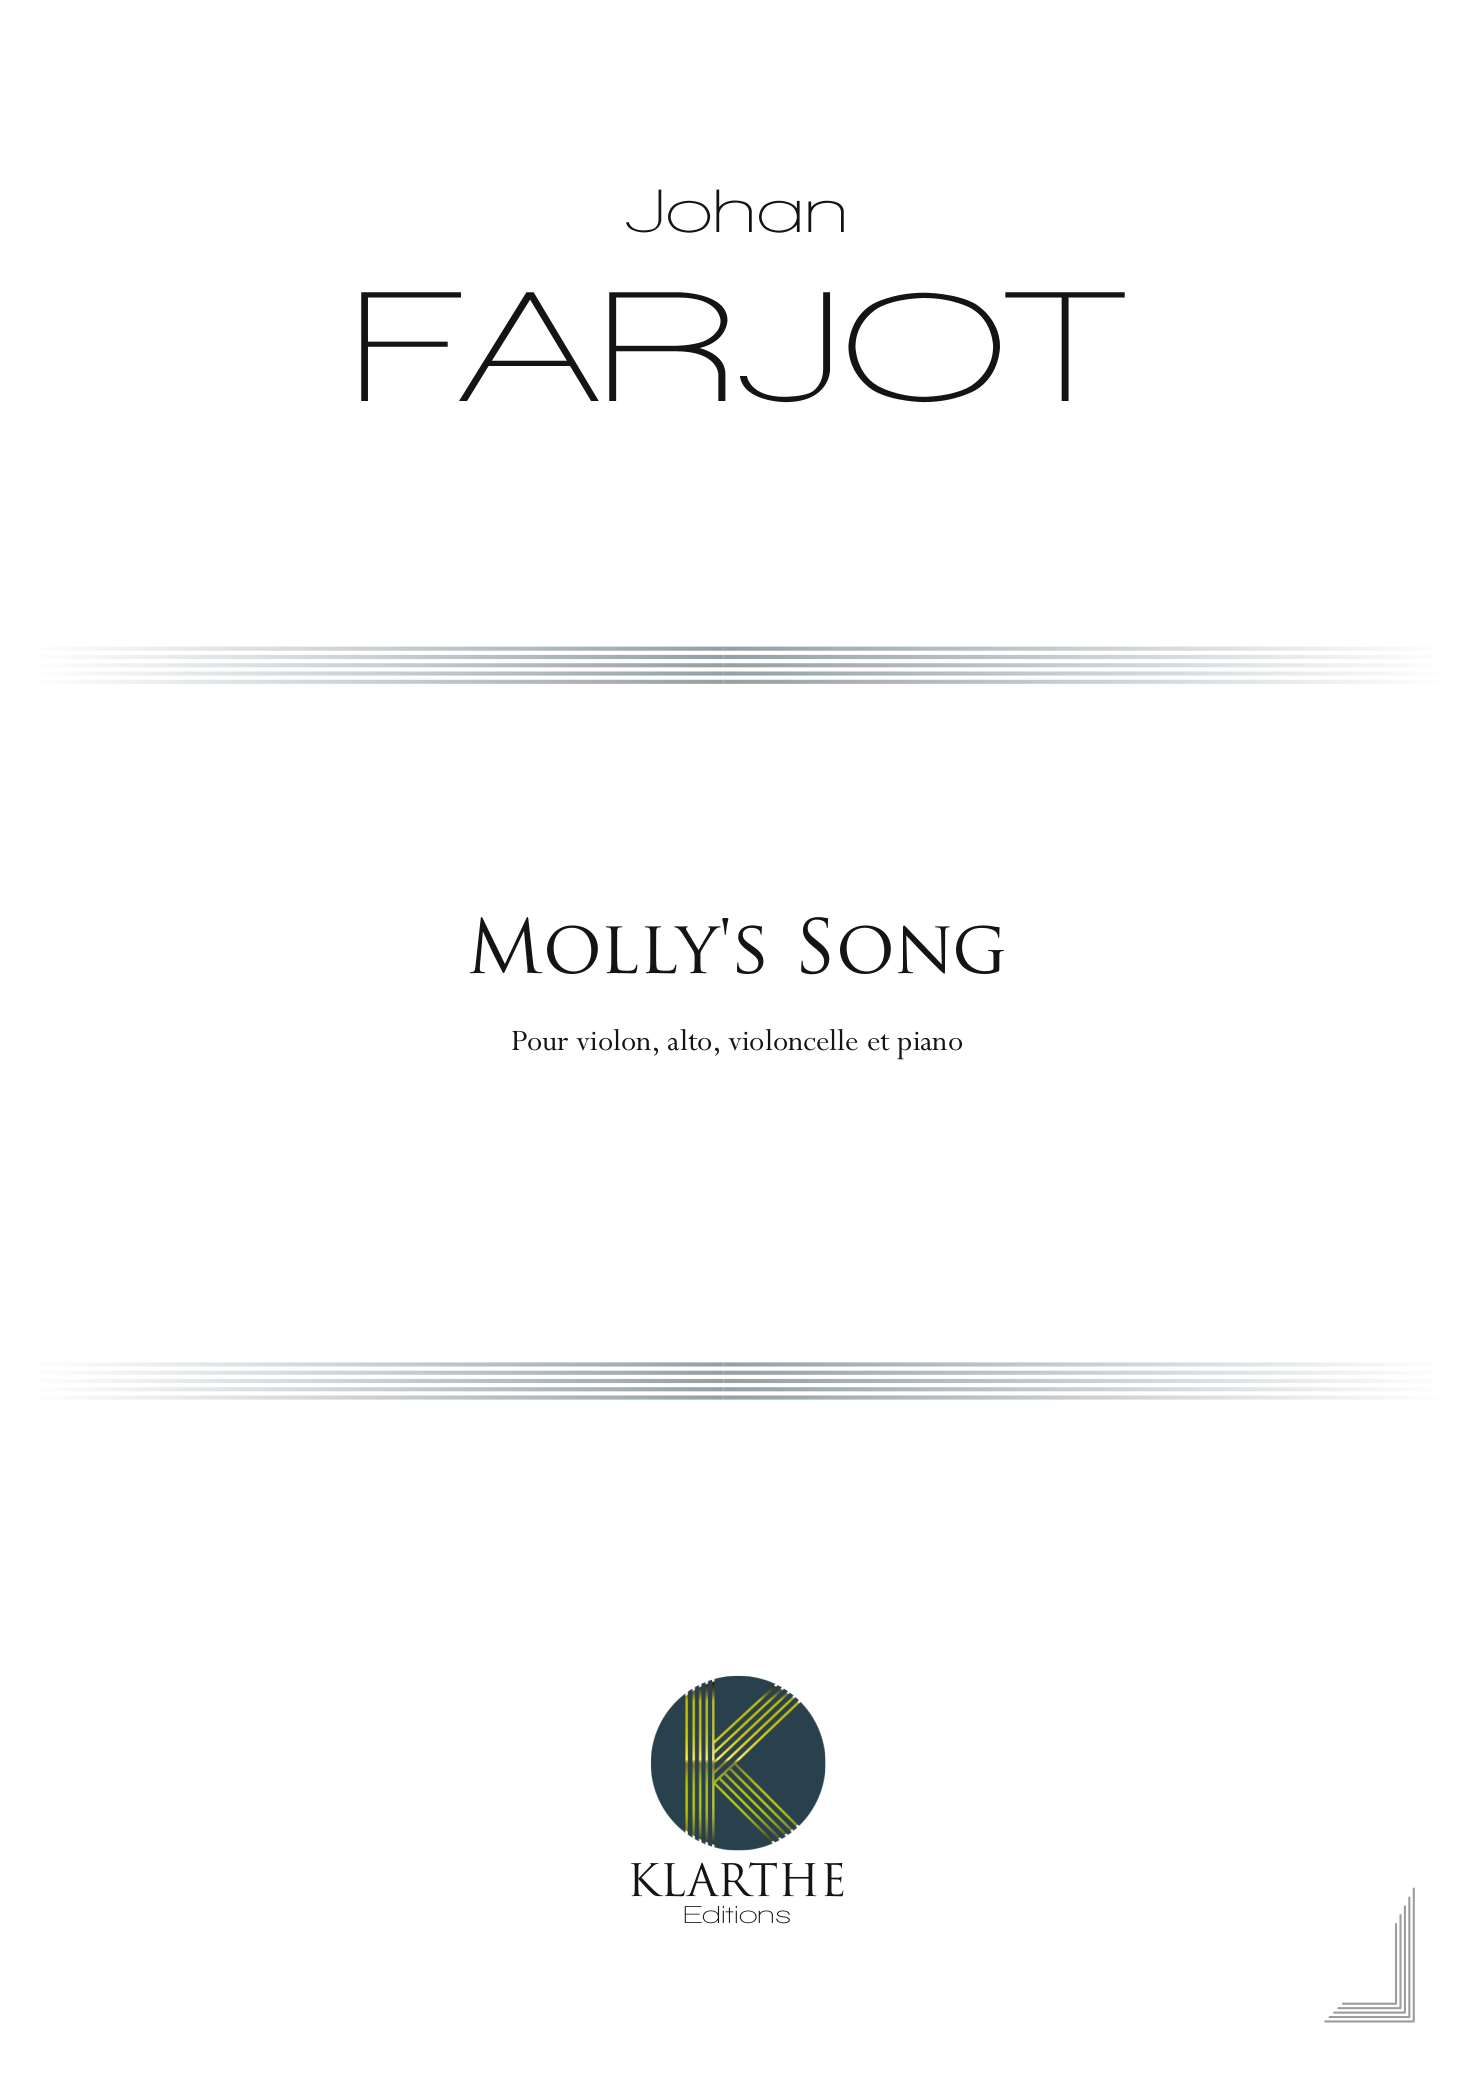 Molly's song (FARJOT JOHAN)